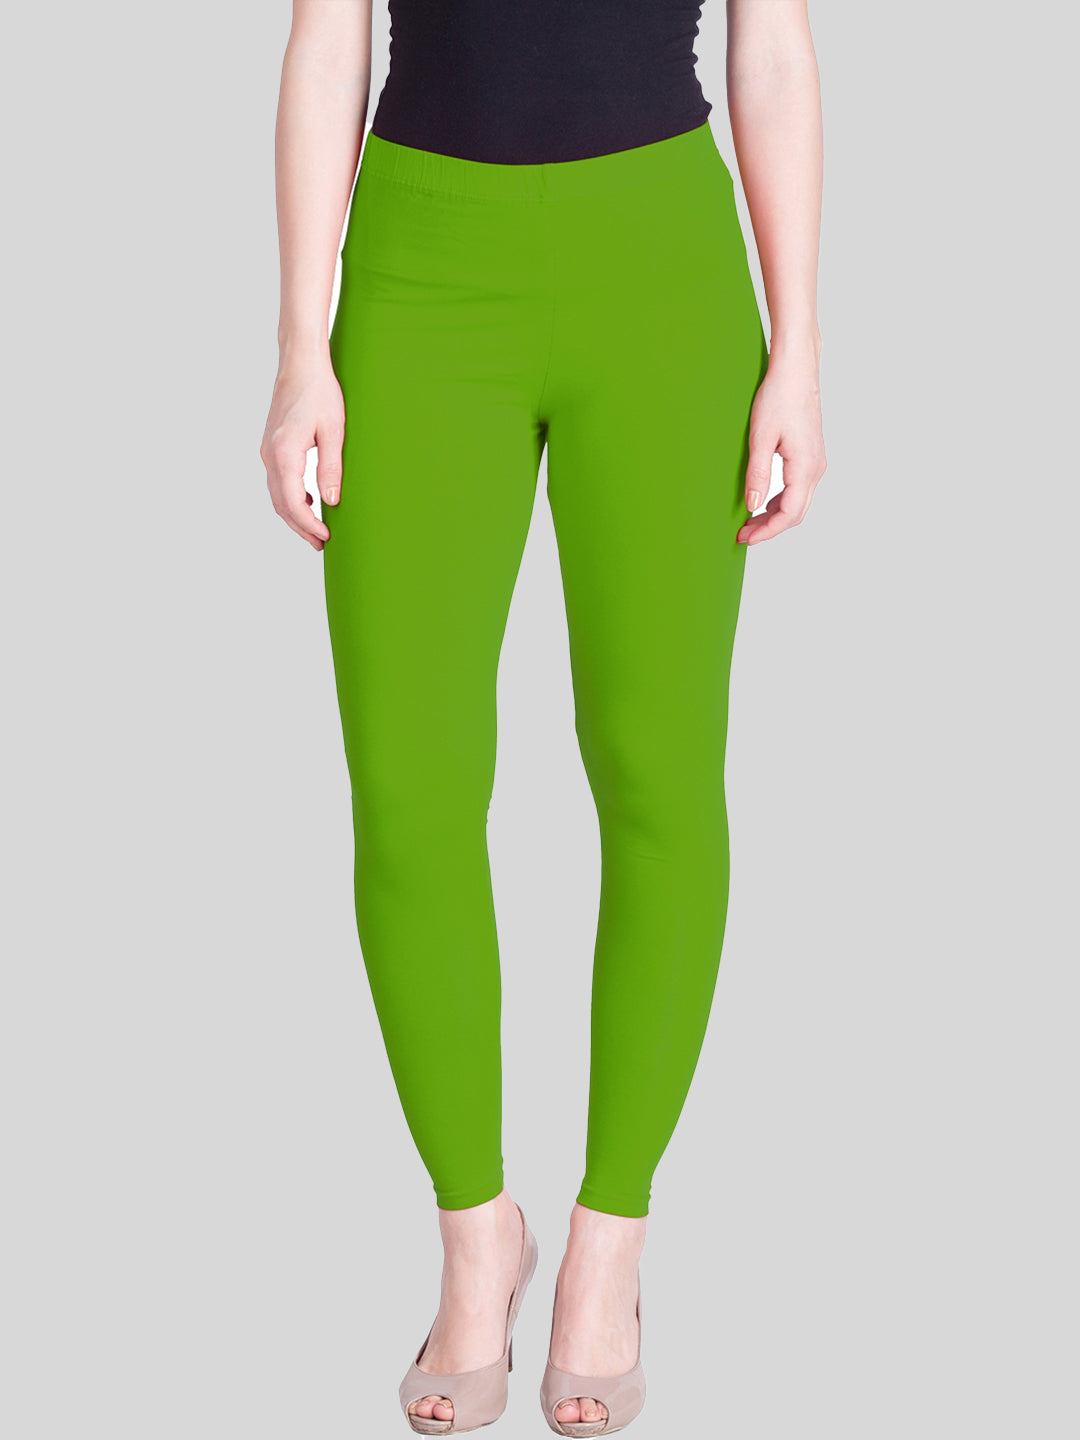 Buy Lyra Aqua Green Cotton Mid Rise Leggings for Women Online @ Tata CLiQ